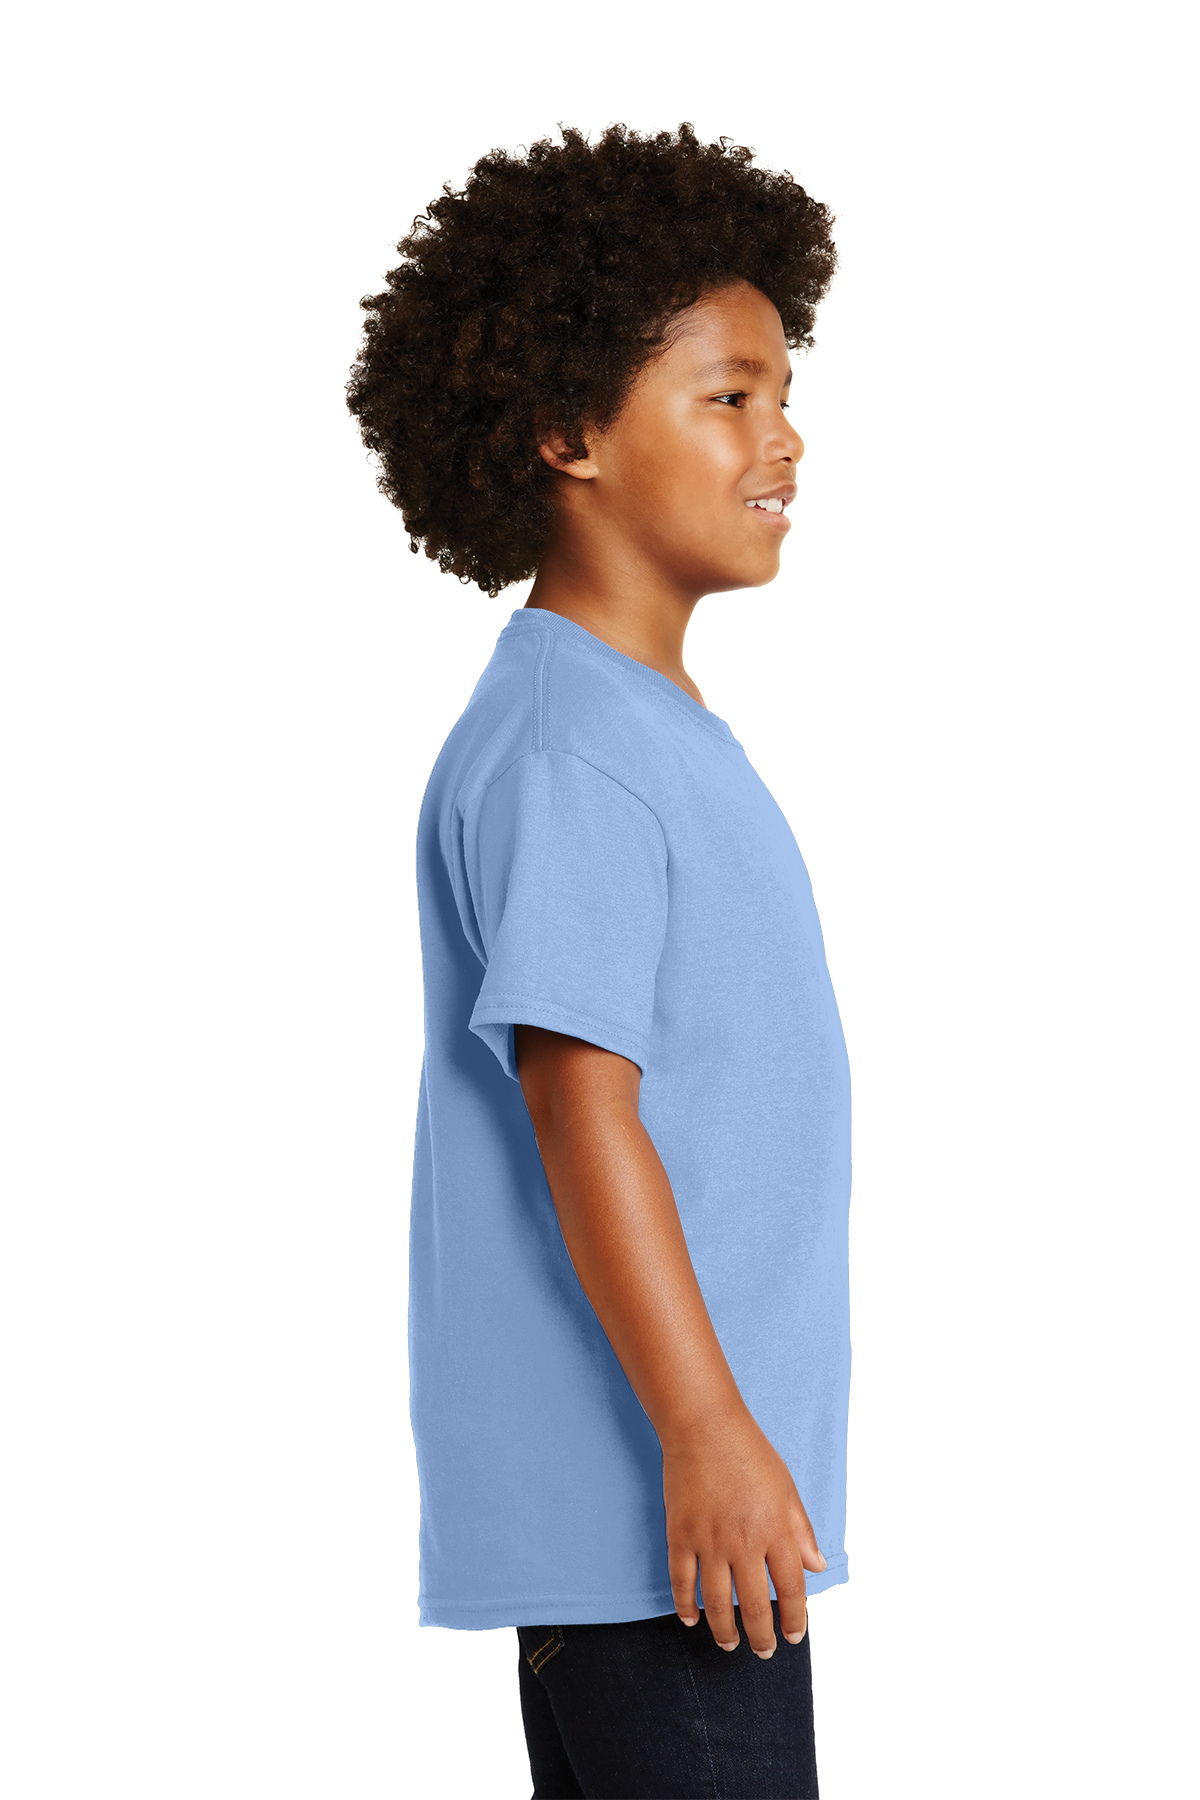 Youth Ultra Product | US | SanMar Cotton T-Shirt Cotton 100% Gildan